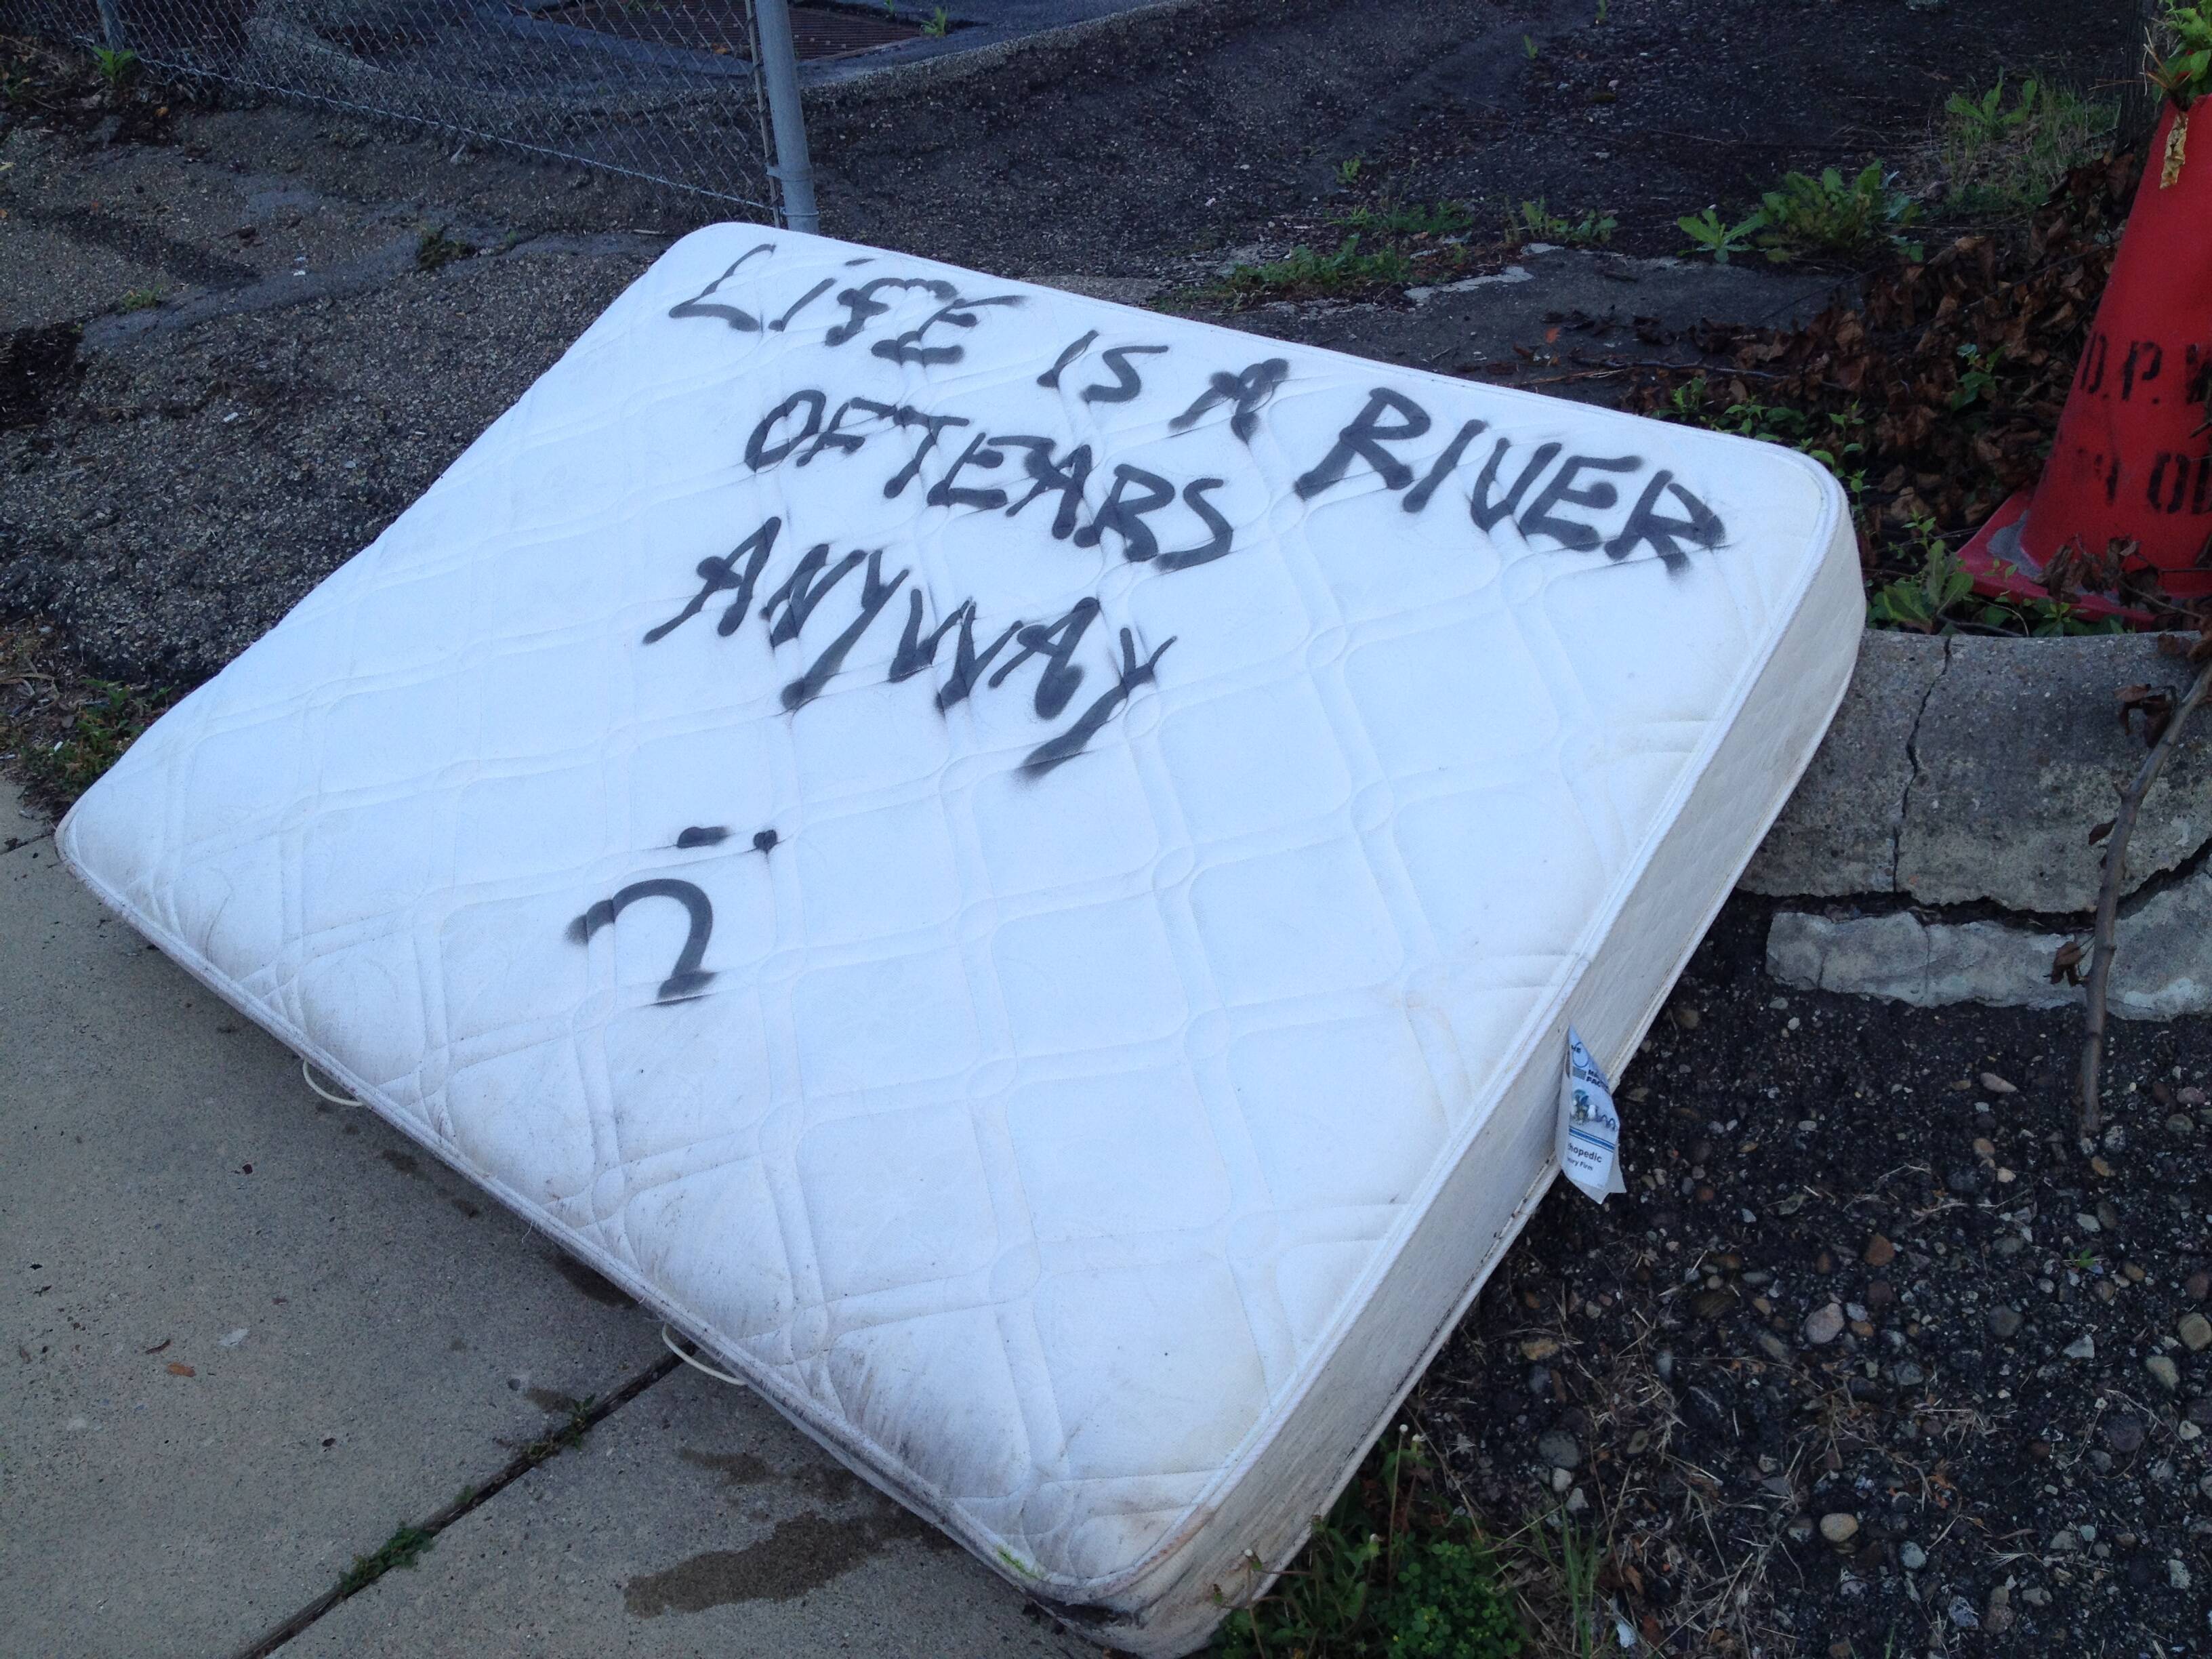 A sad mattress in a sad parking lot in Bloomfield, not far from that duplex. (June 2015)